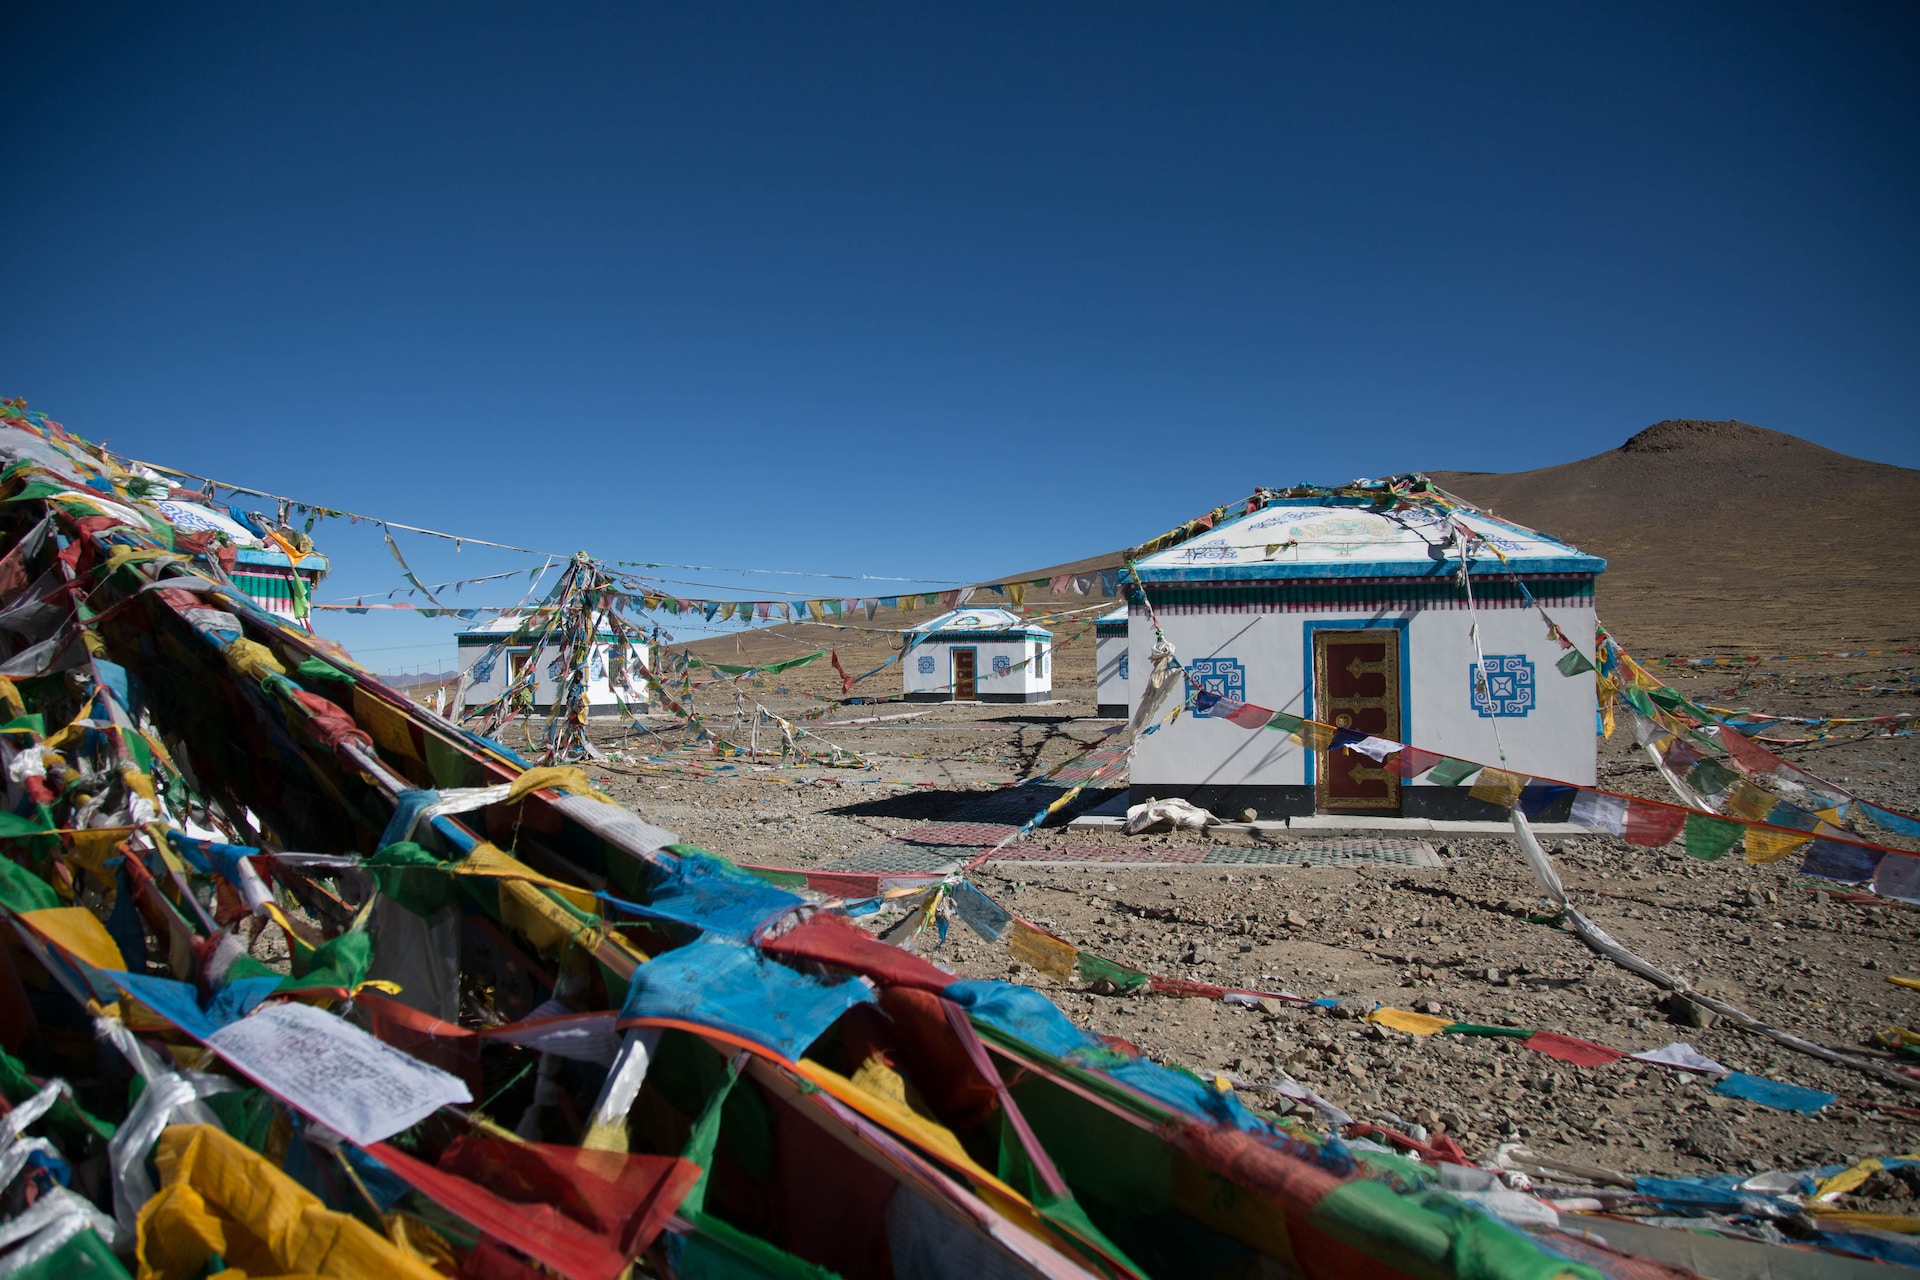 Bazni kamp Mont Everesta ostaje na istom mestu uprkos opasnostima